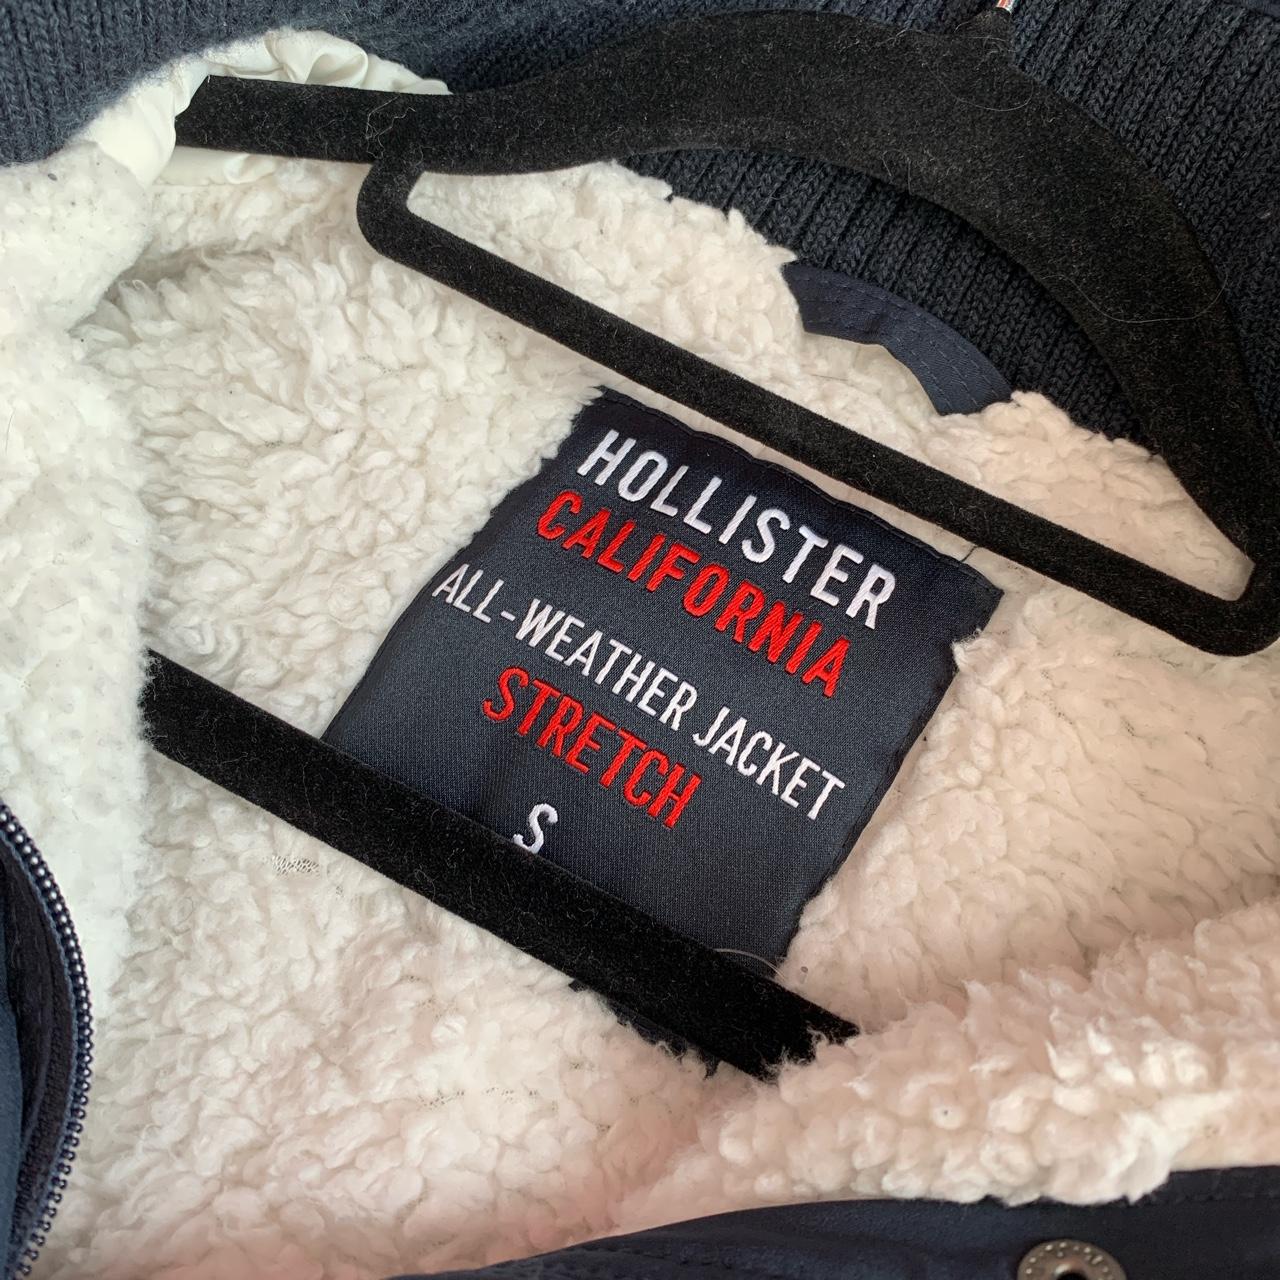 Hollister, Jackets & Coats, Holister California Allweather Jacket